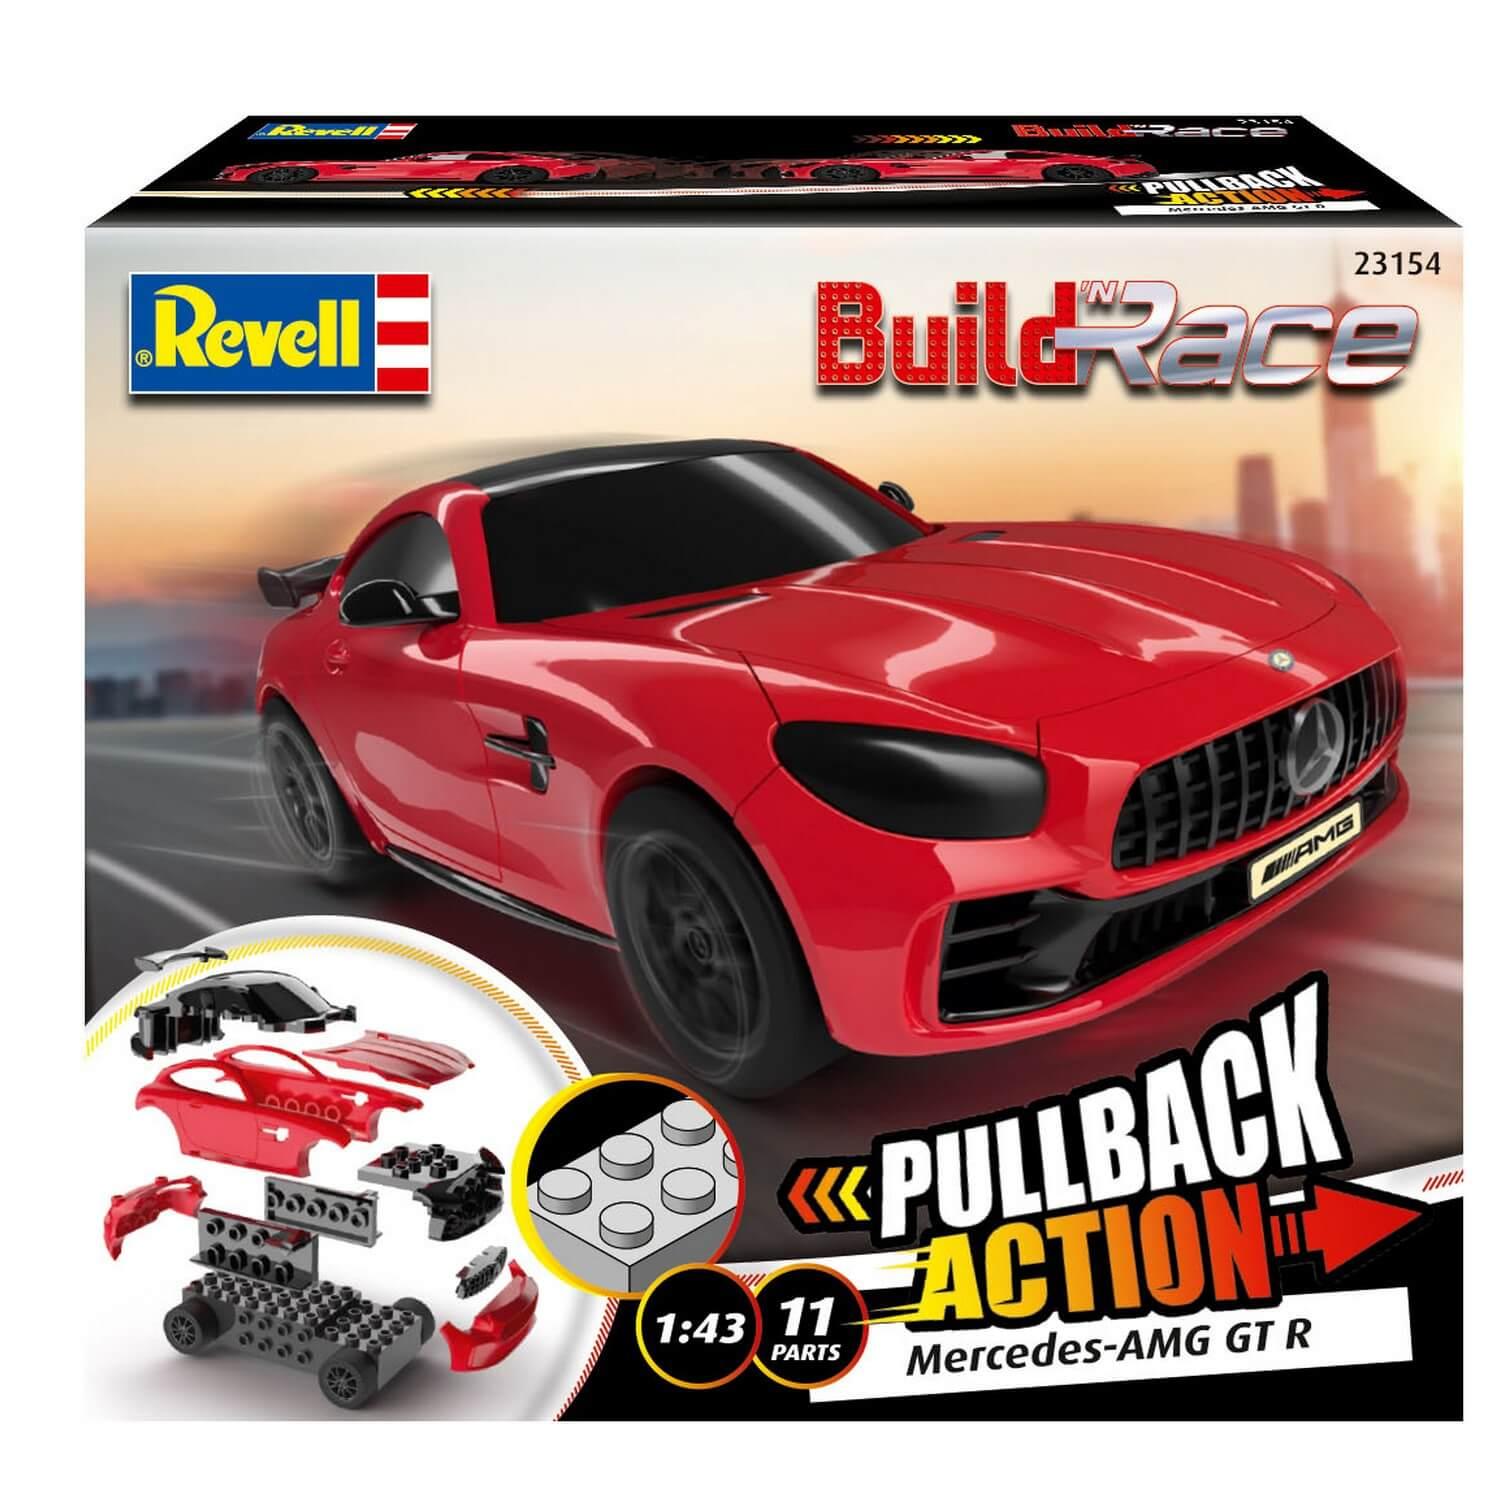 Maquette de voiture - REVELL - Revell Pull Back Rallye Car - Rouge